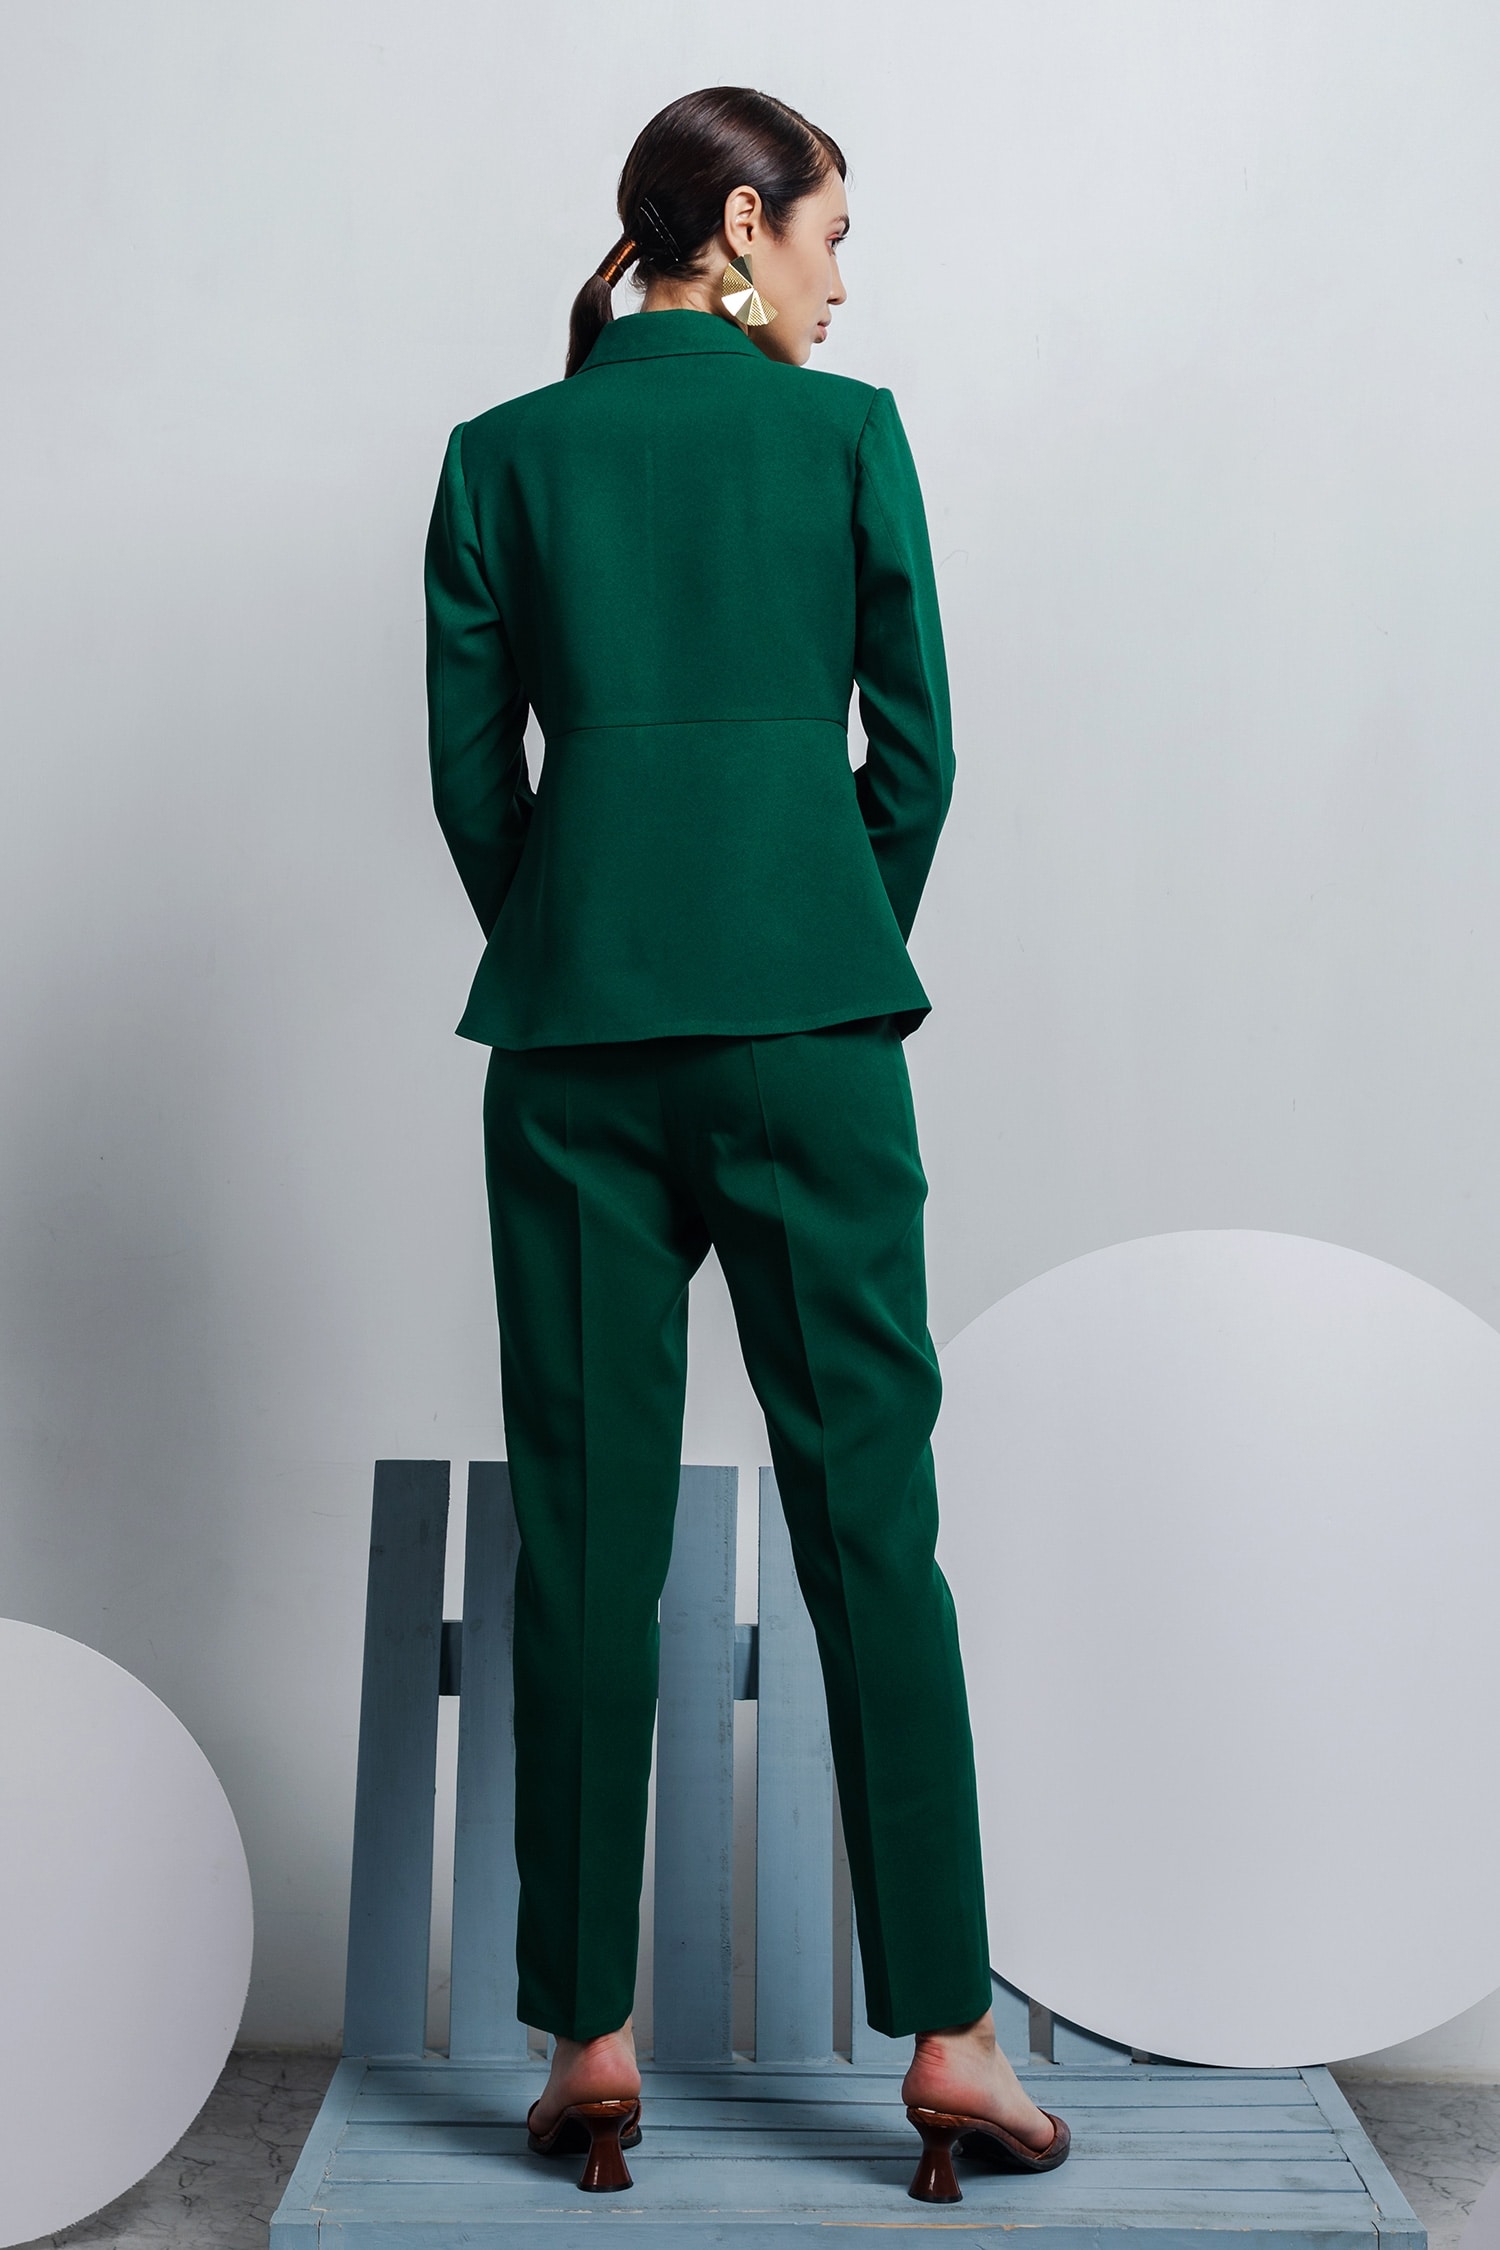 Emerald Green Suit for Women